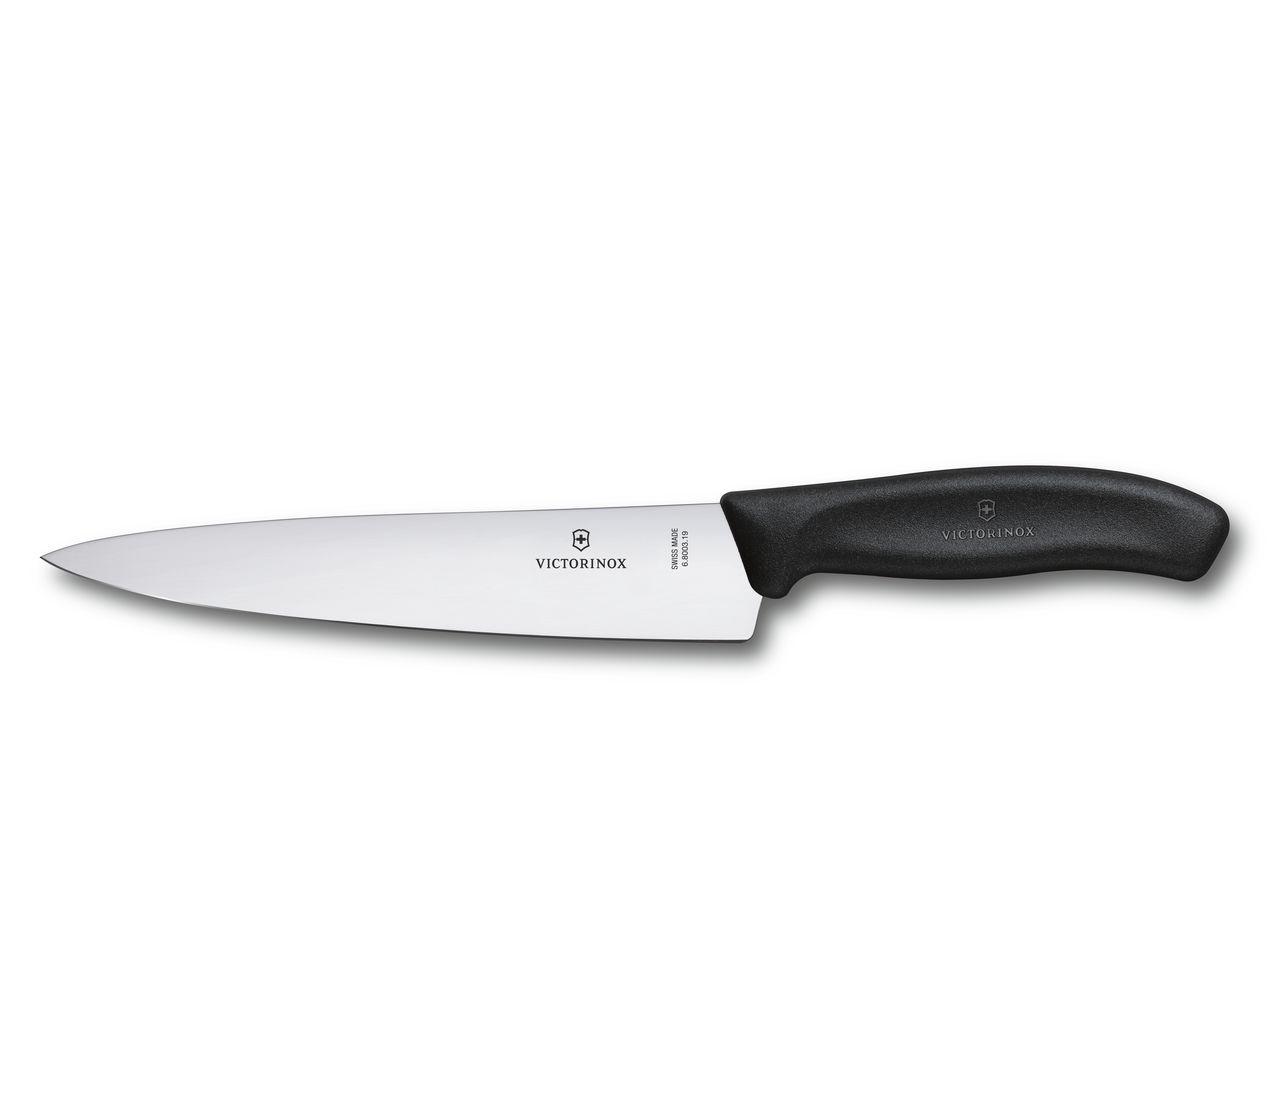 Victorinox Swiss Classic Carving Knife in black - 6.8003.19B